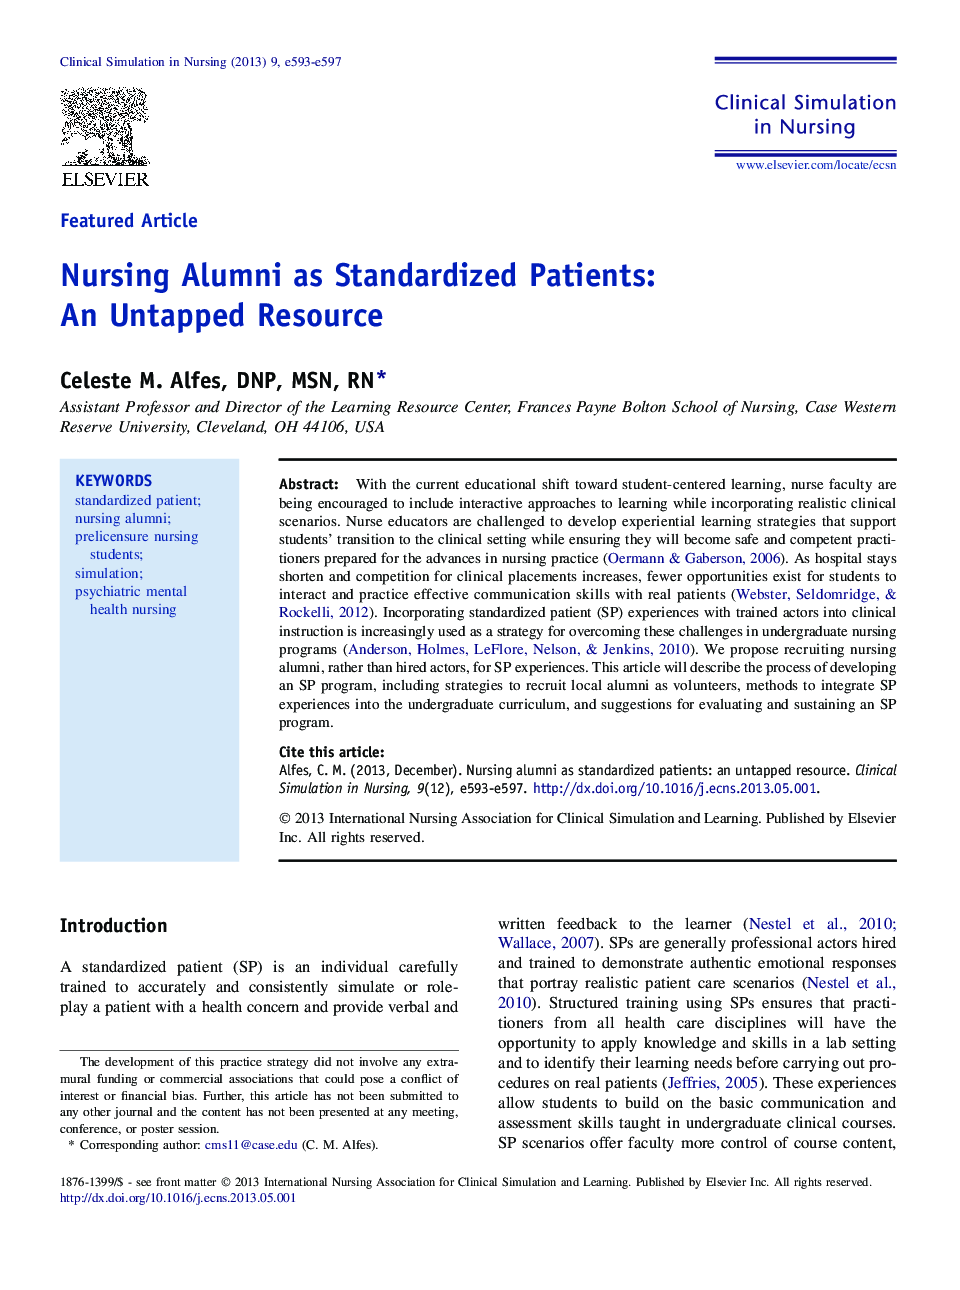 Featured ArticleNursing Alumni as Standardized Patients: An Untapped Resource